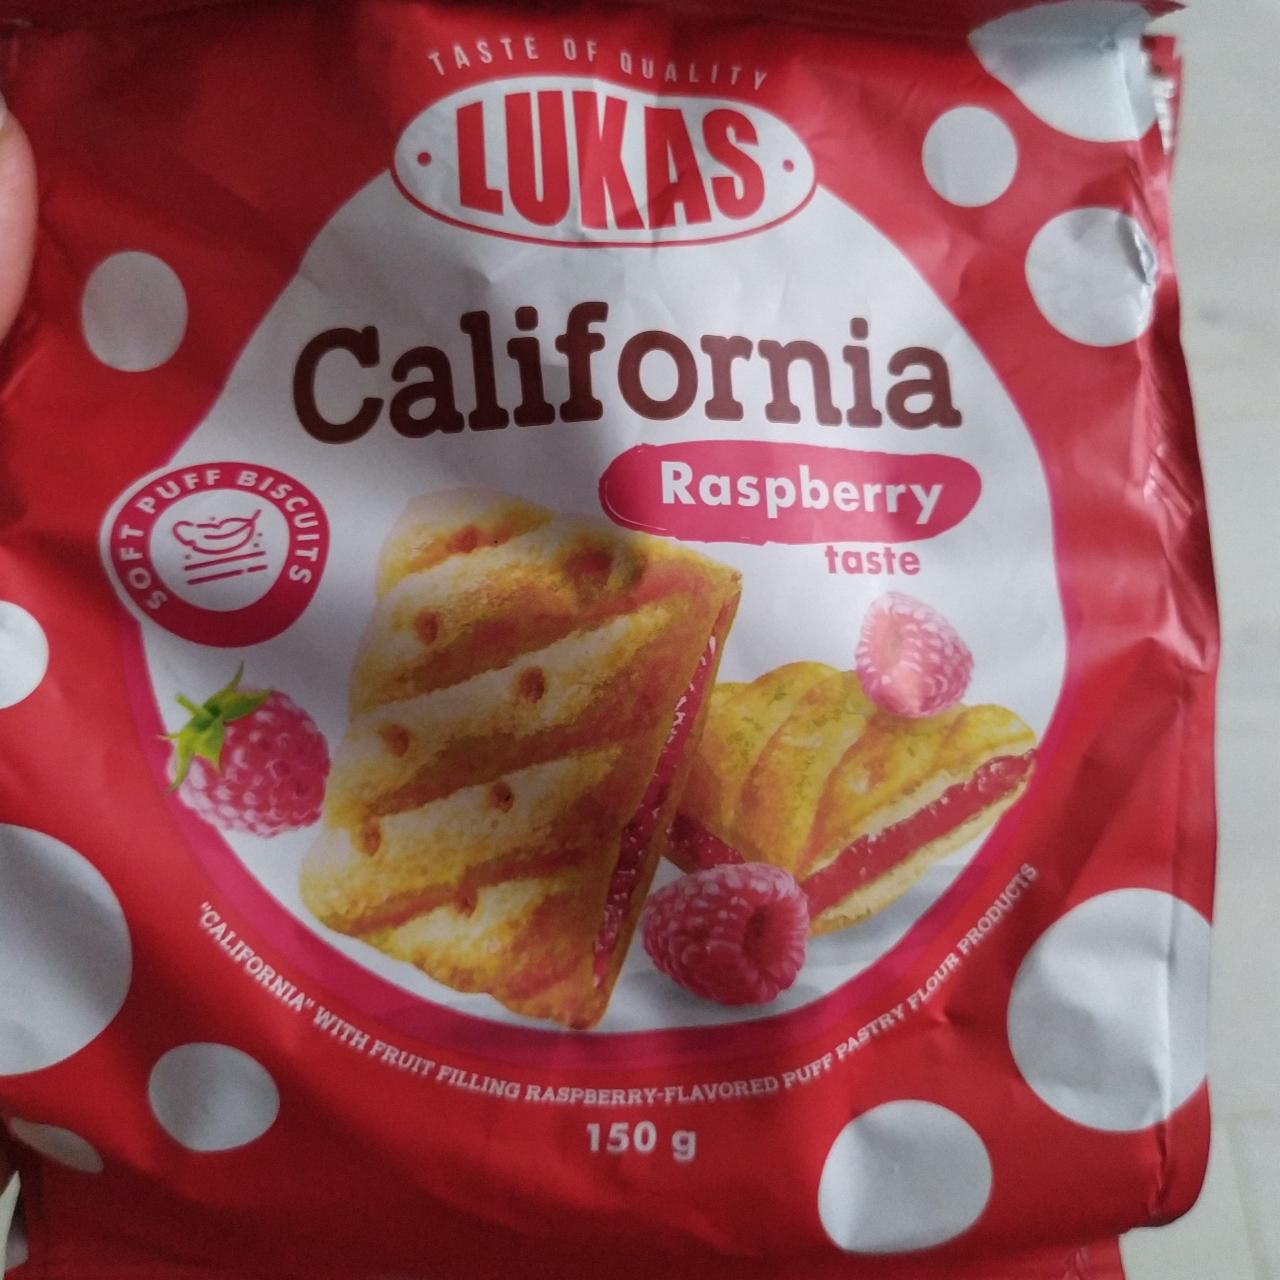 Fotografie - California Raspberry taste Taste of quality Lukas